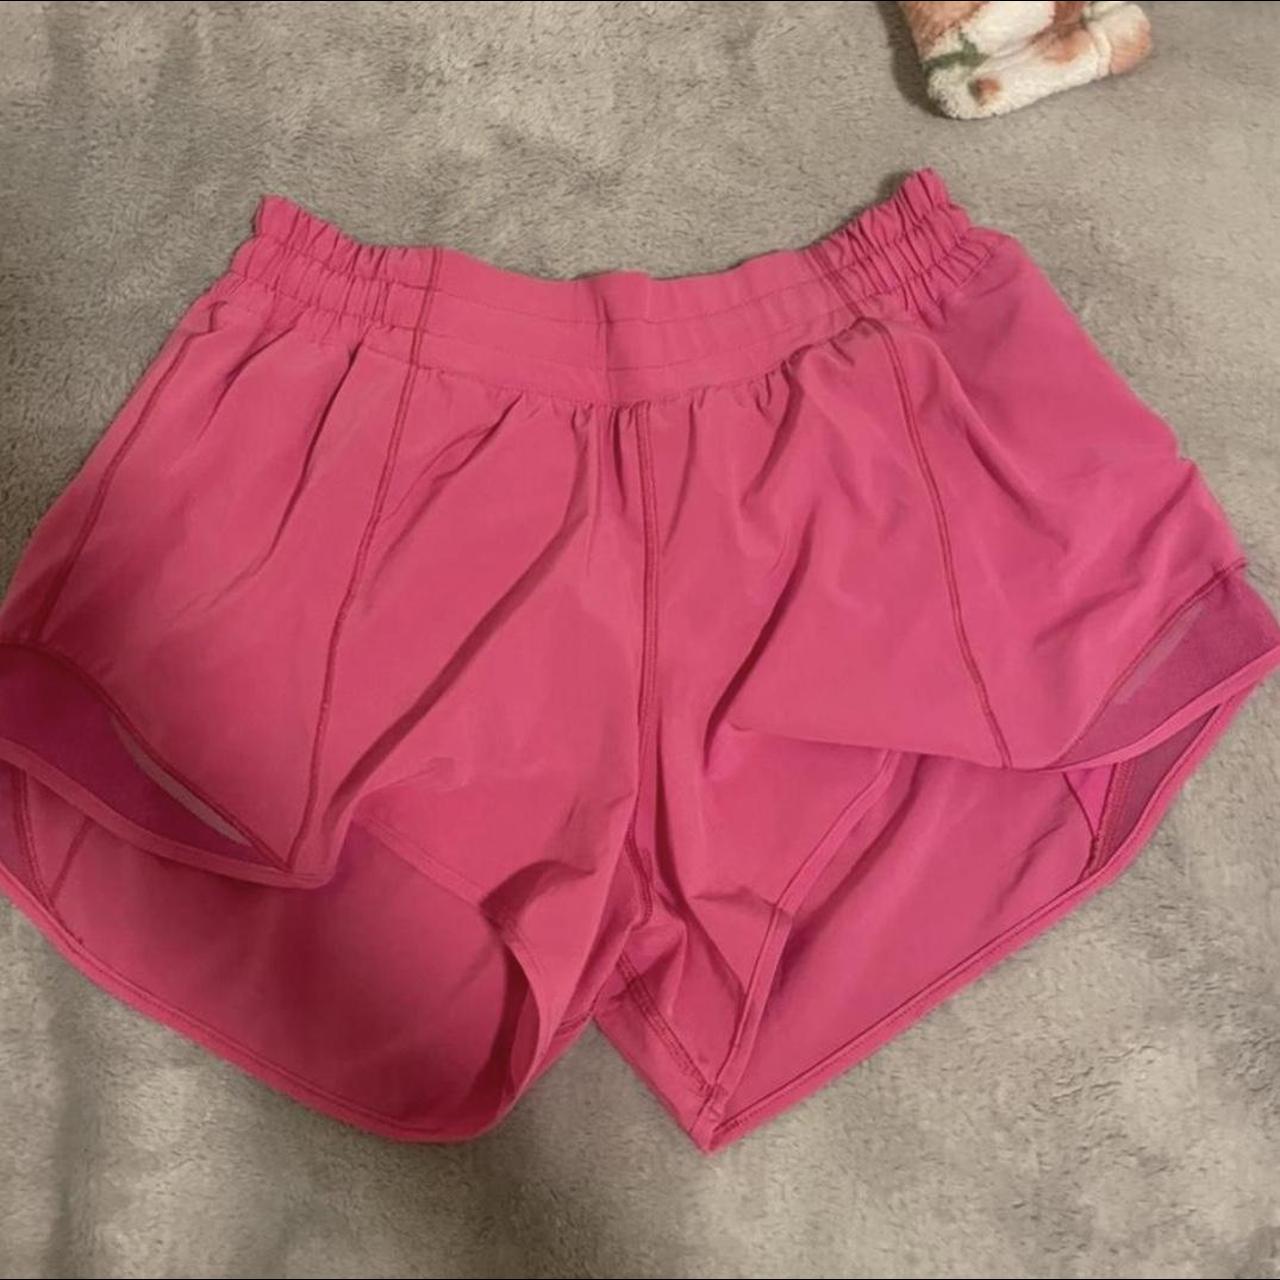 sonic pink hotty hot Lululemon shorts 2.5 in - Depop